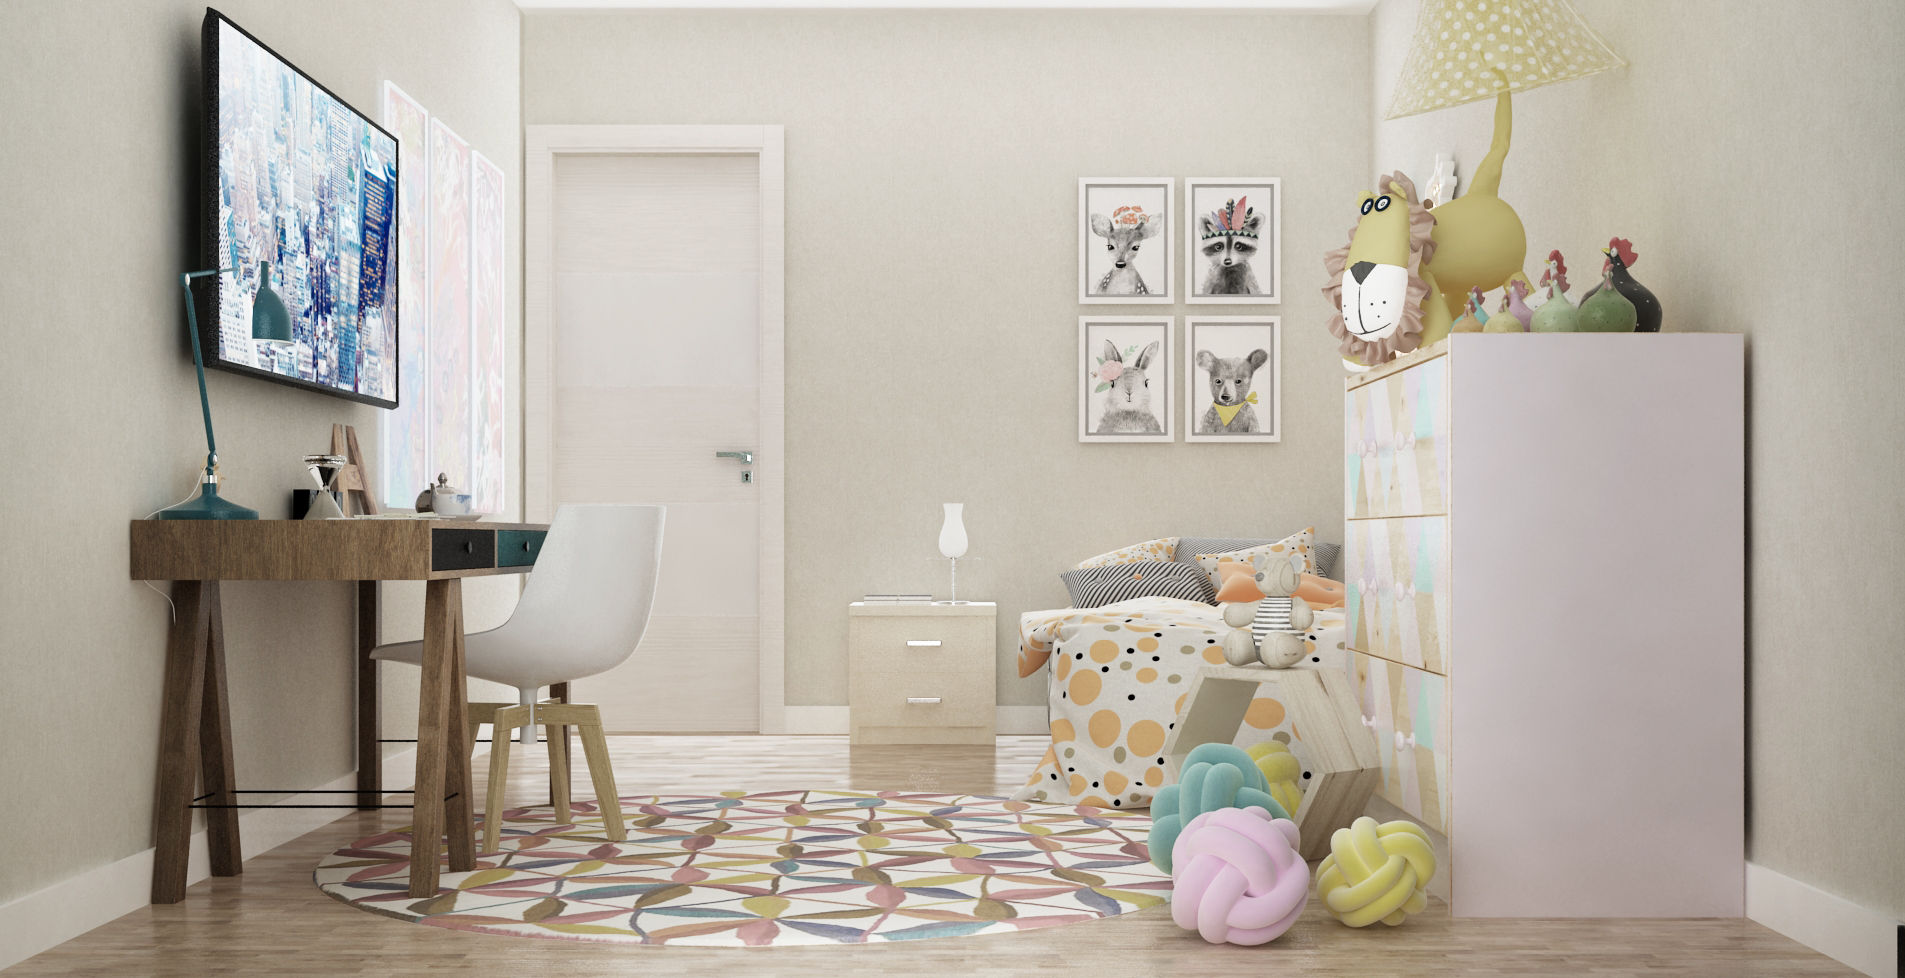 CASA CC, De Vivo Home Design De Vivo Home Design Dormitorios infantiles modernos: